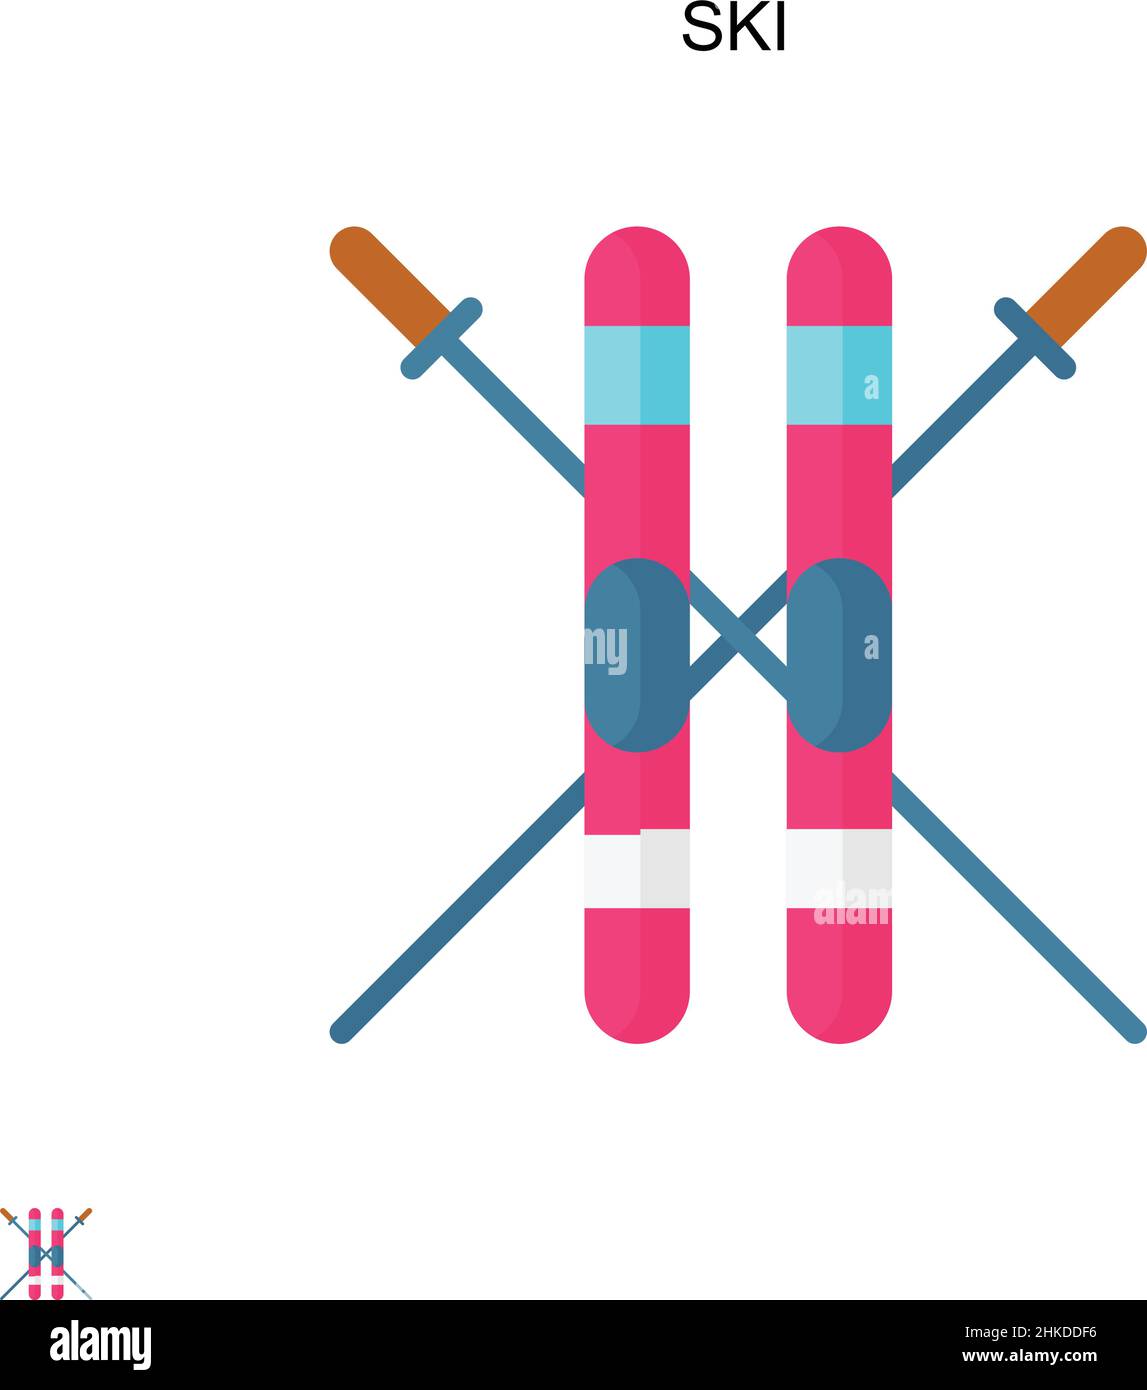 Ski Simple Vektor-Symbol. Illustration Symbol Design-Vorlage für Web mobile UI-Element. Stock Vektor